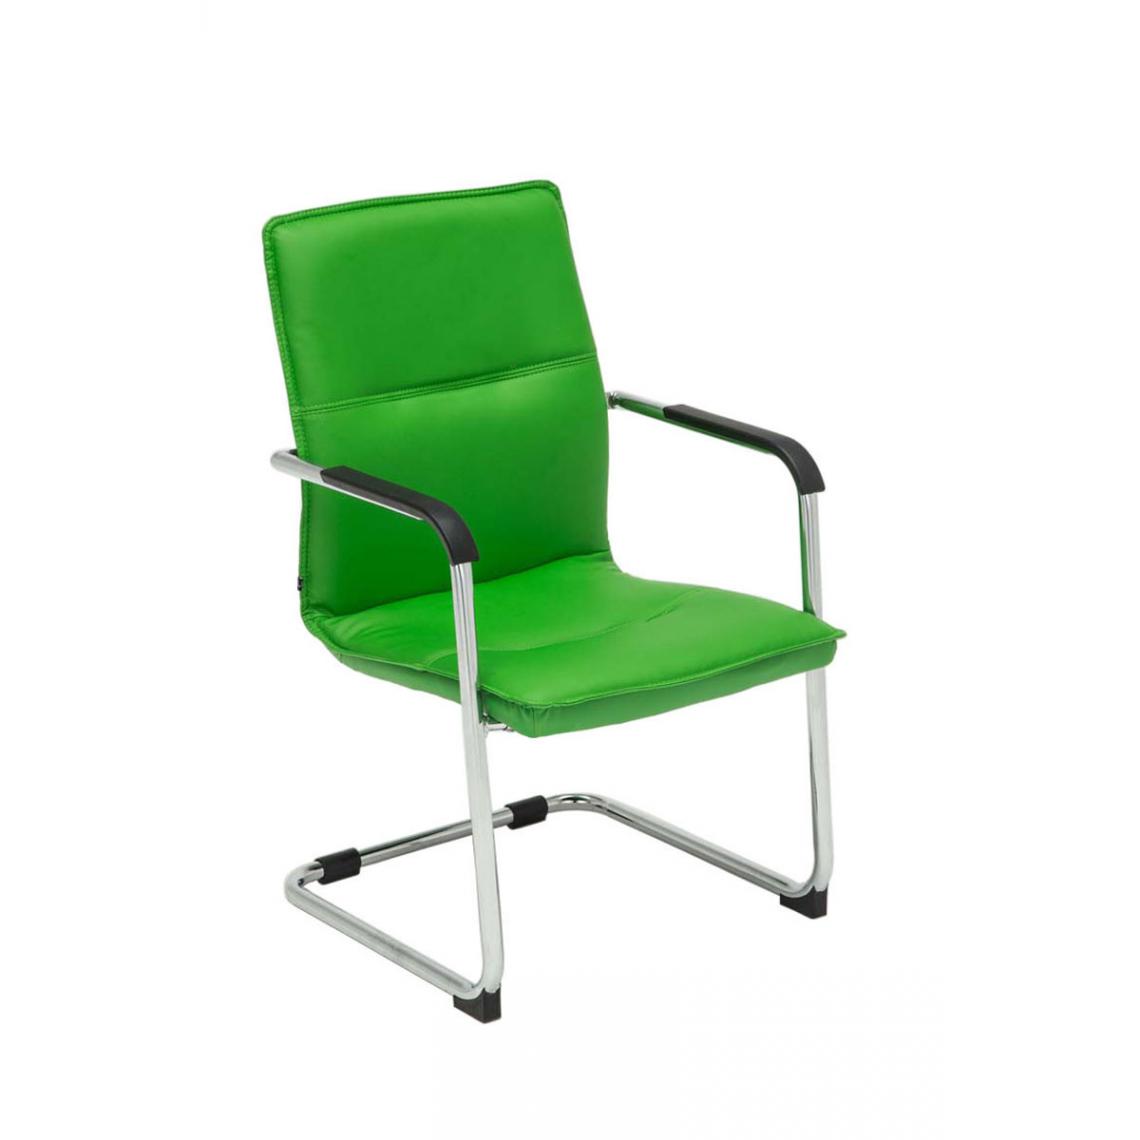 Icaverne - Inedit Chaise visiteur categorie Zagreb couleur vert - Chaises